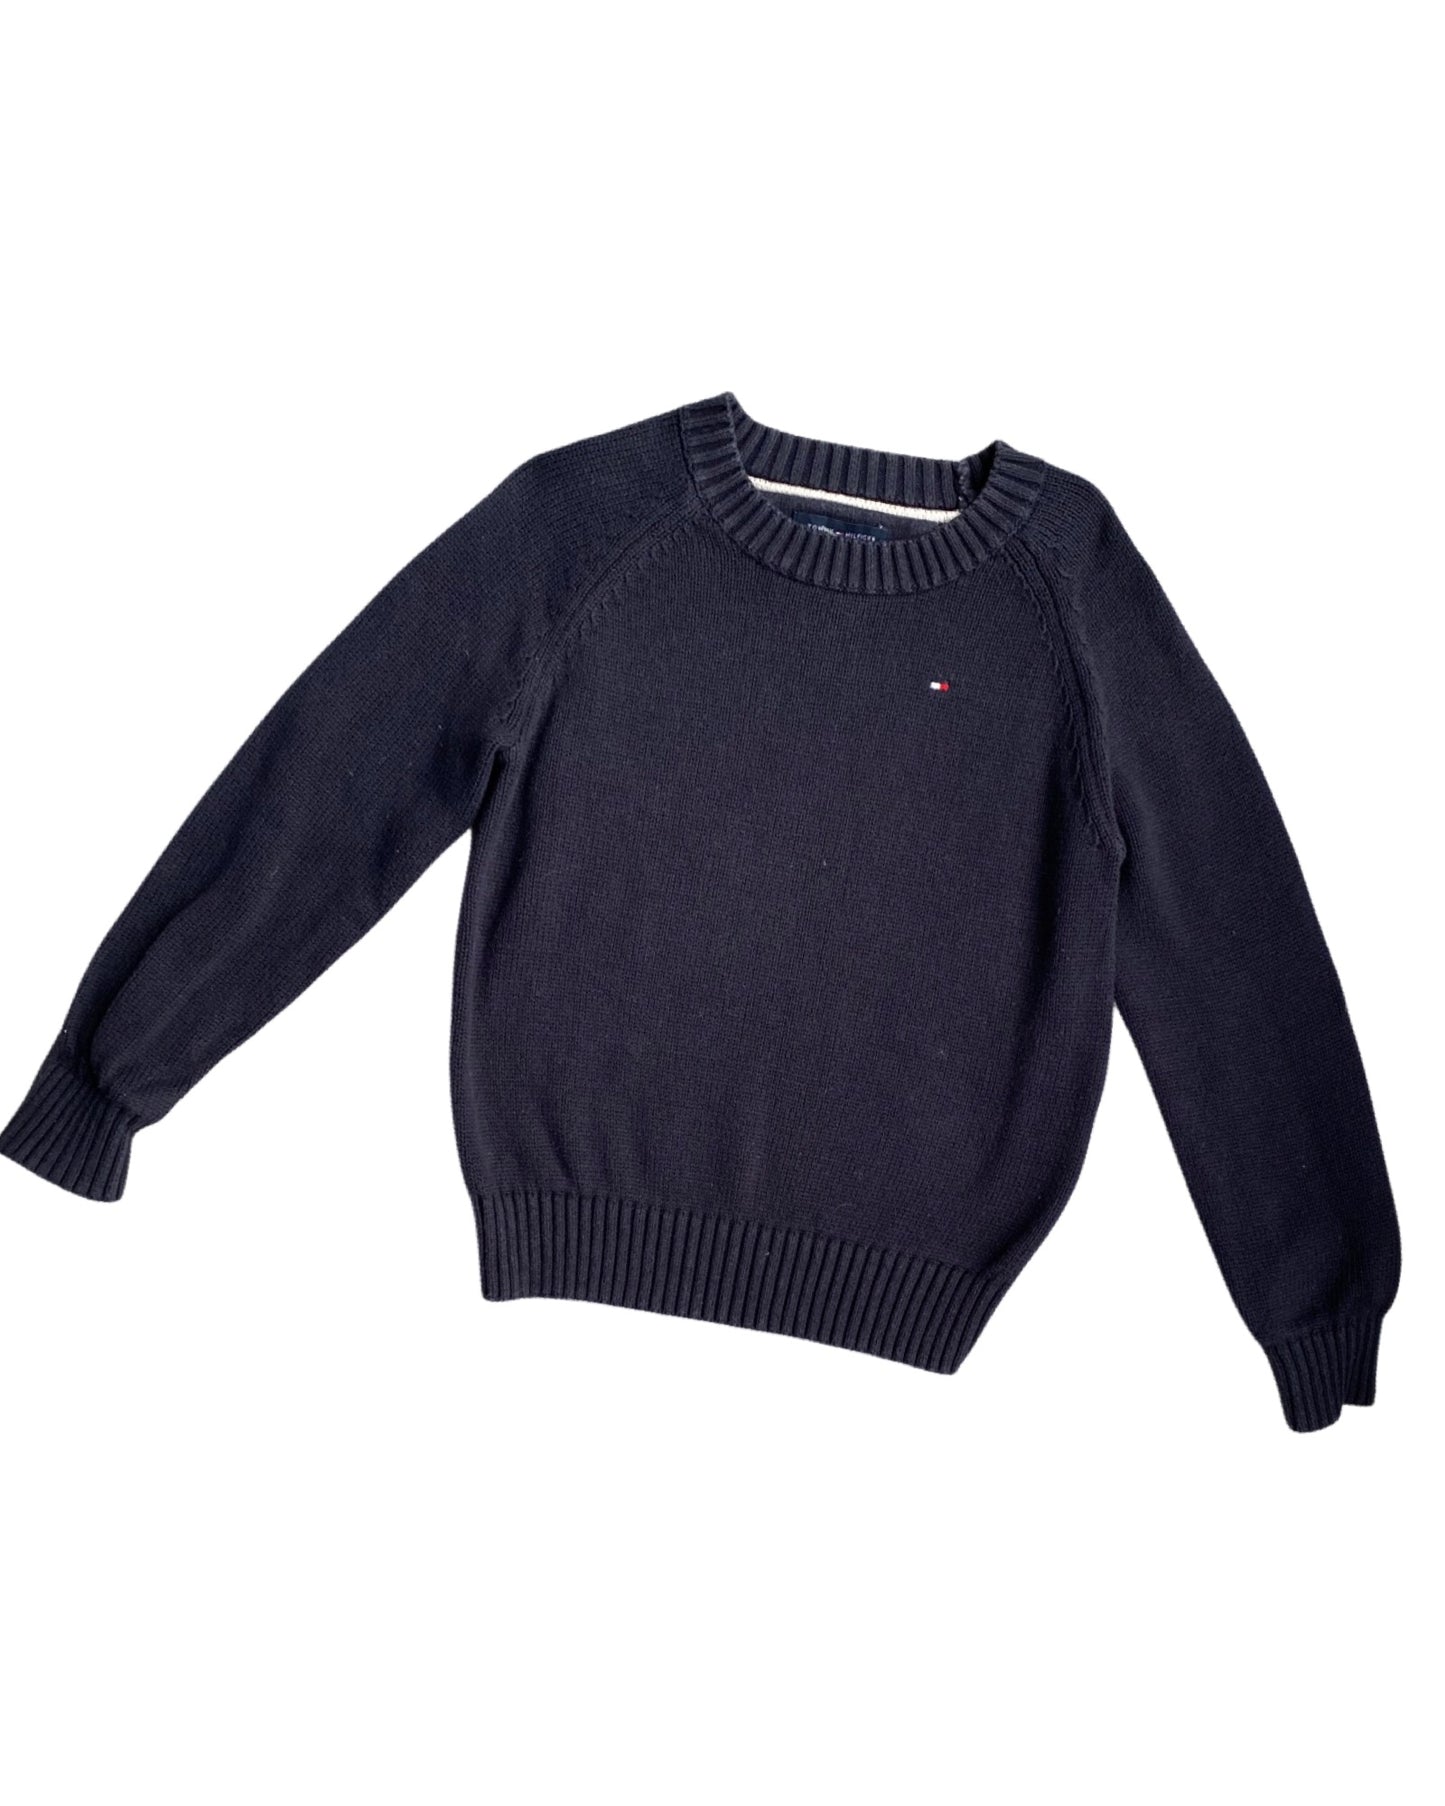 Tommy Hilfiger navy knit jumper (4-5yrs)